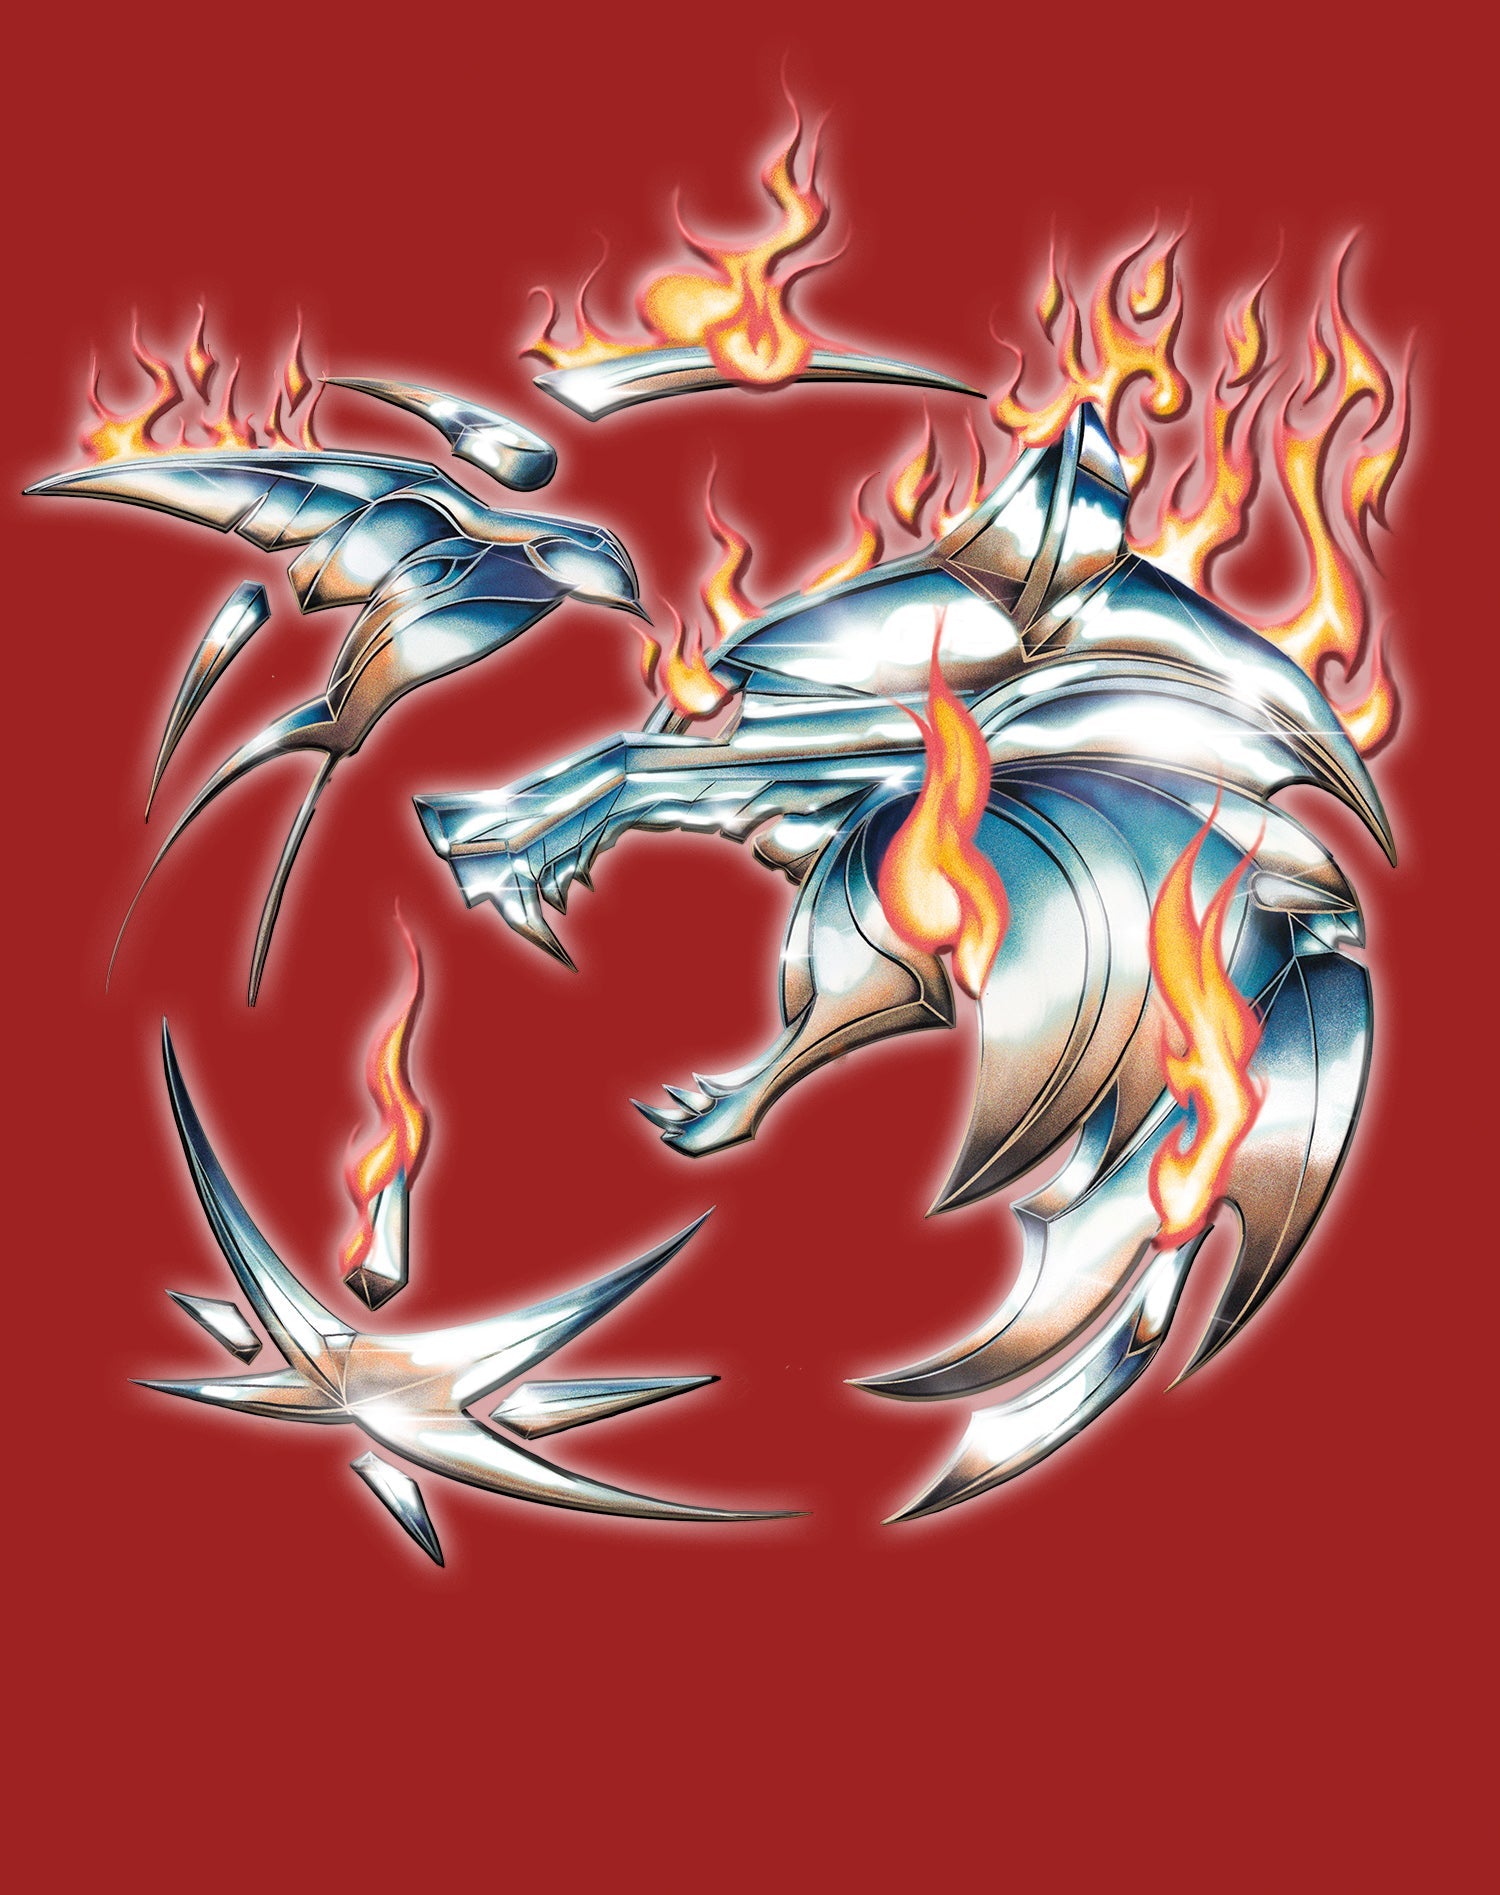 The Witcher Logo Metal Fire Official Sweatshirt